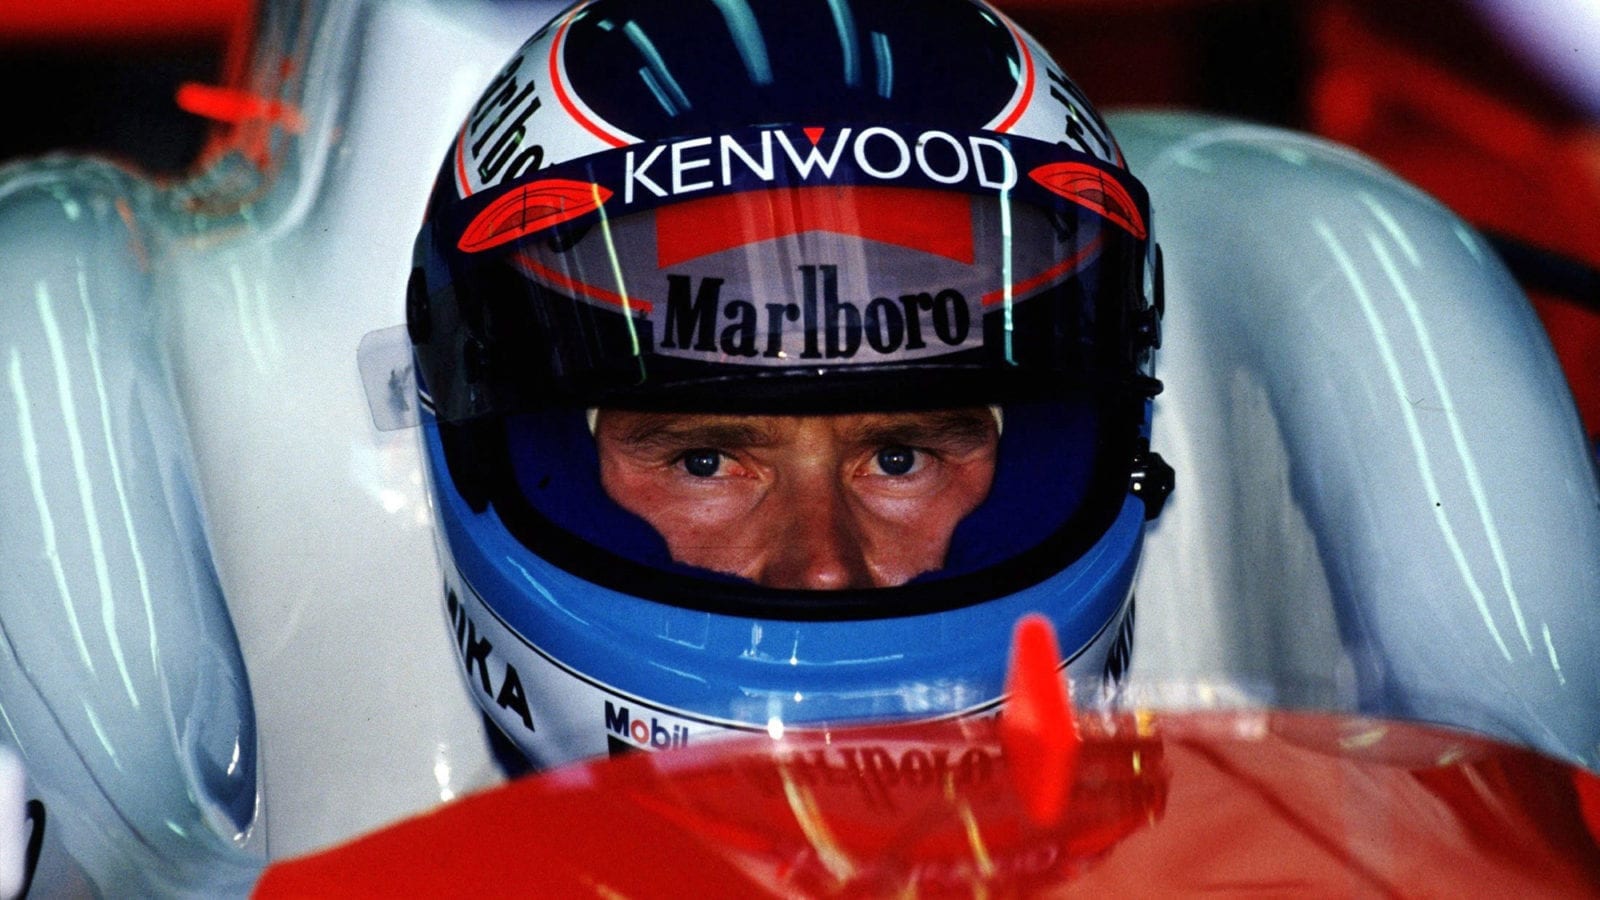 Mika Hakkinen peers through his helmet while sitting in his McLAren during the 1996 F1 Australian Grand Prix weekend at Melbourne